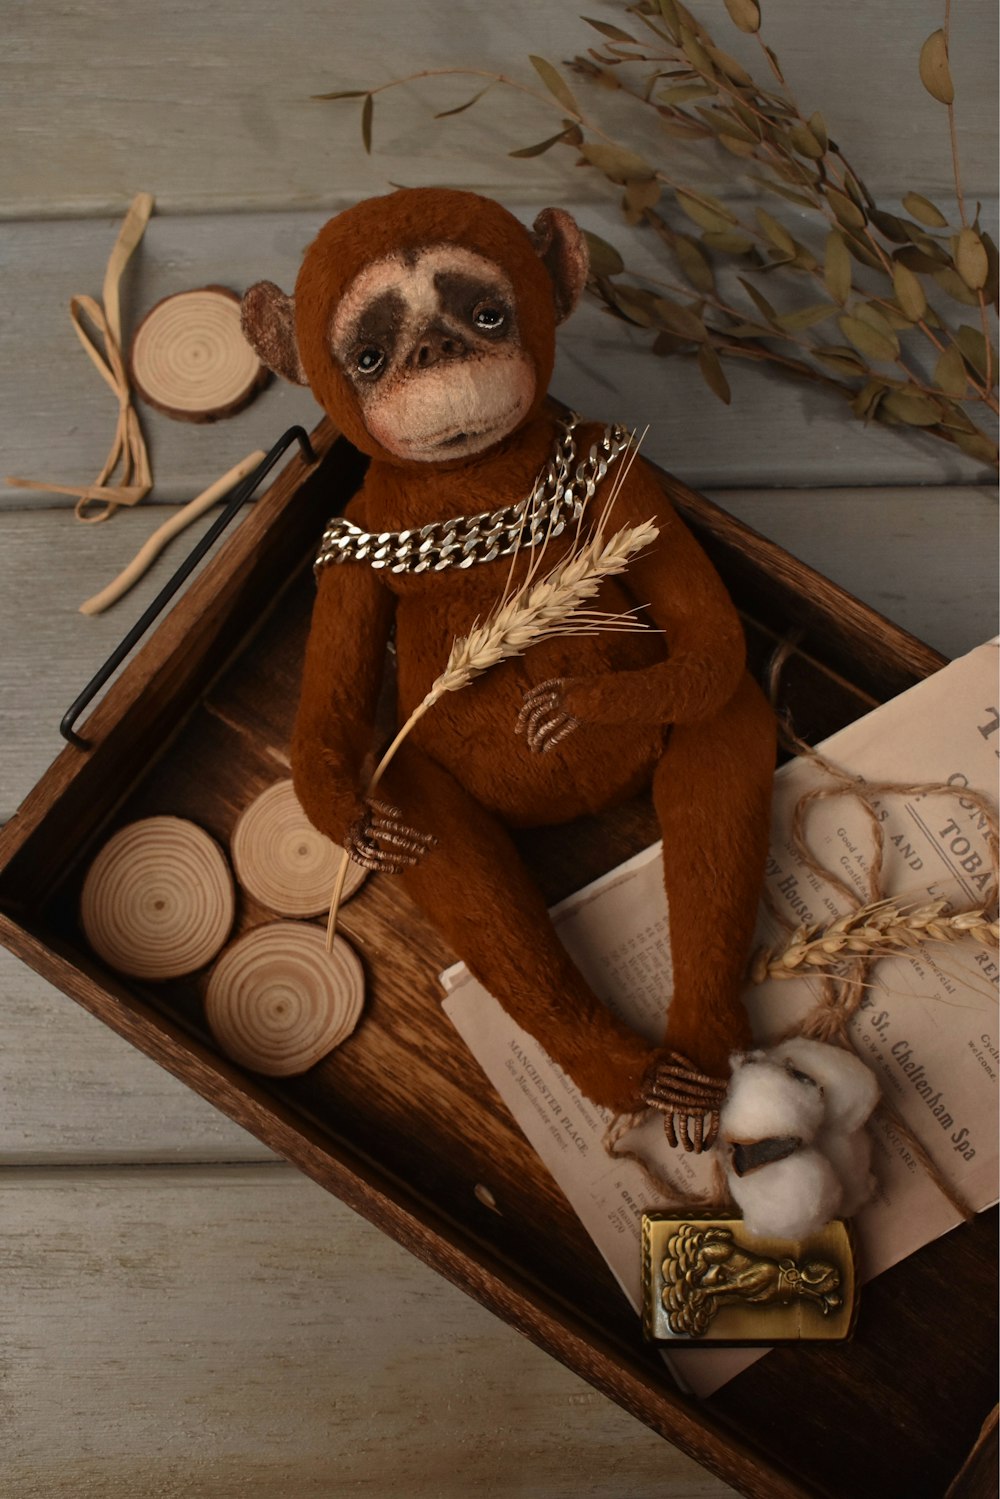 a stuffed monkey sitting in a wooden box